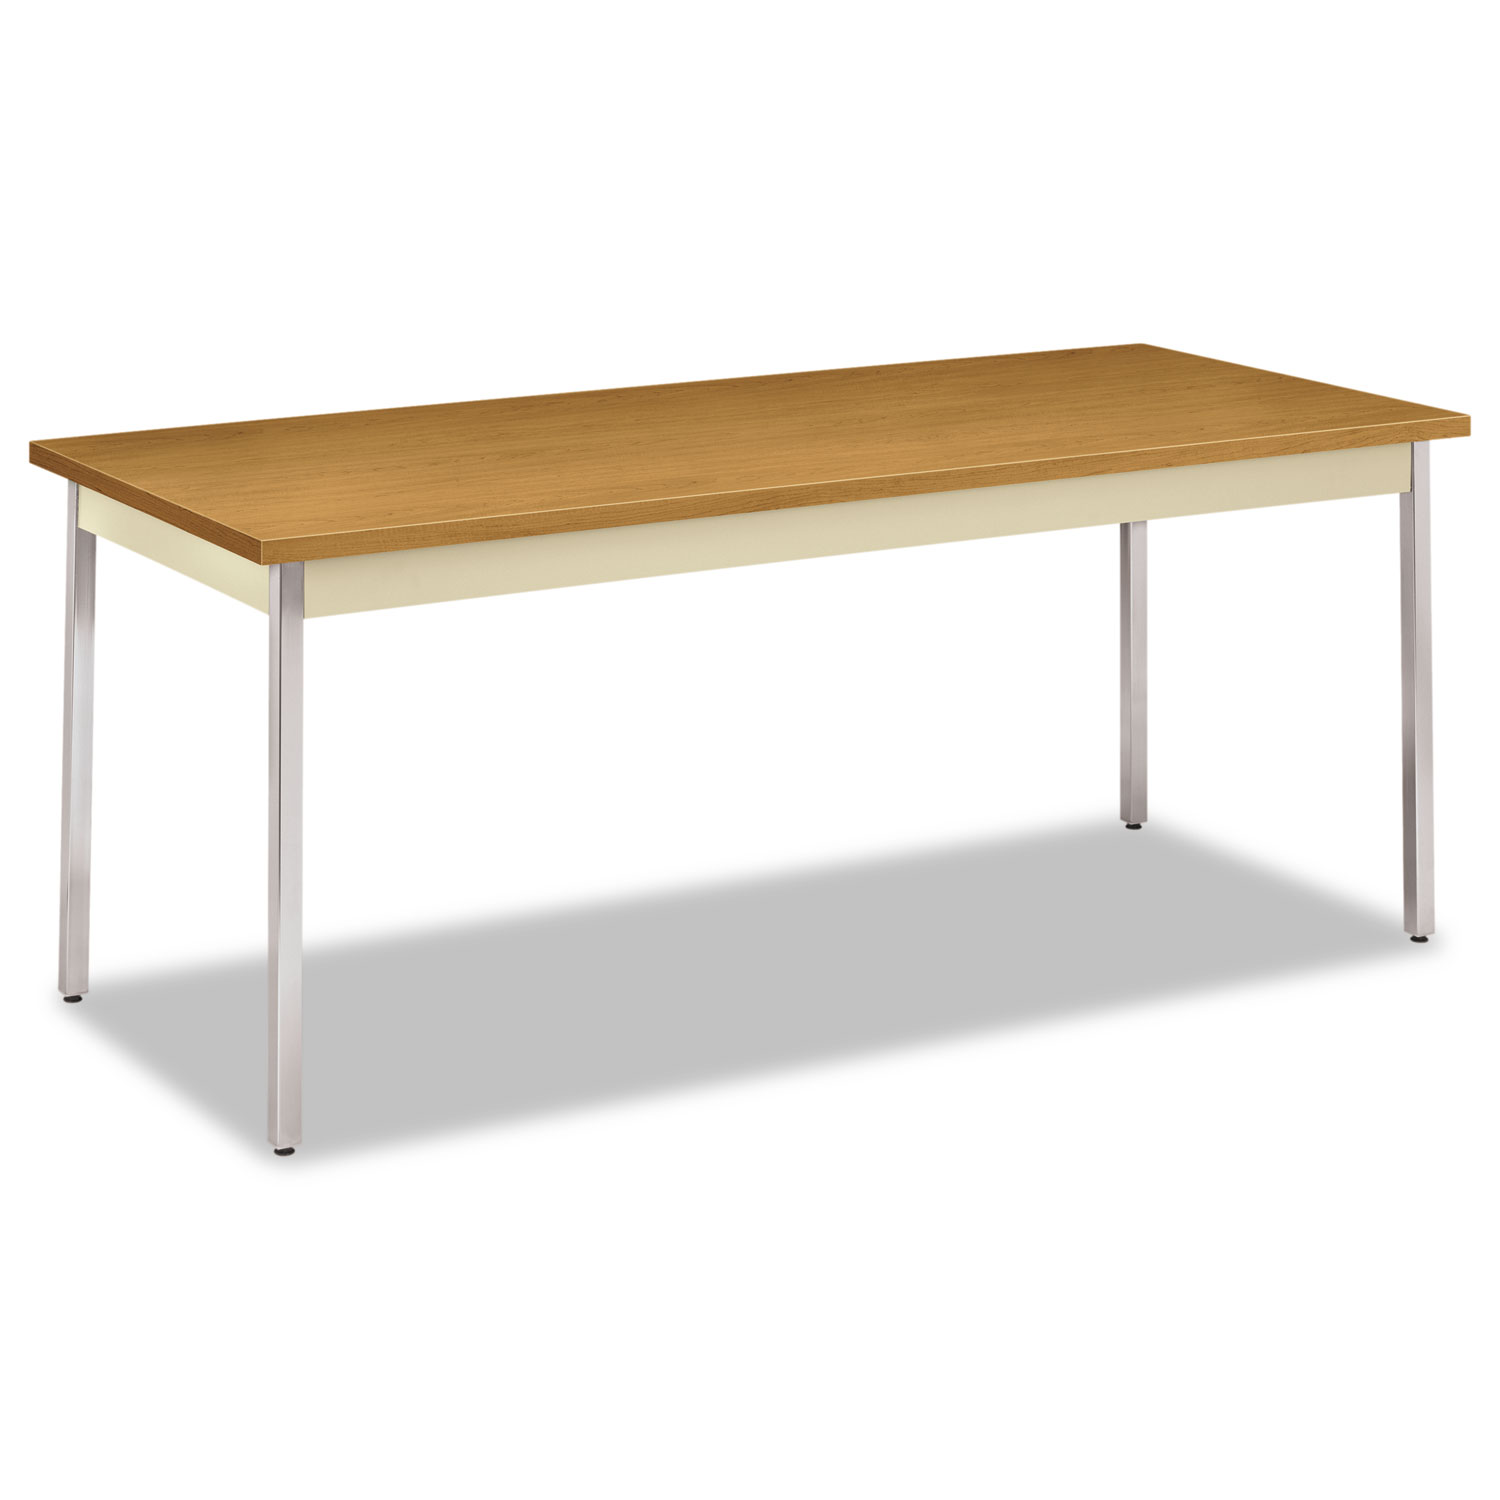 Utility Table, Rectangular, 72w x 30d x 29h, Harvest/Putty